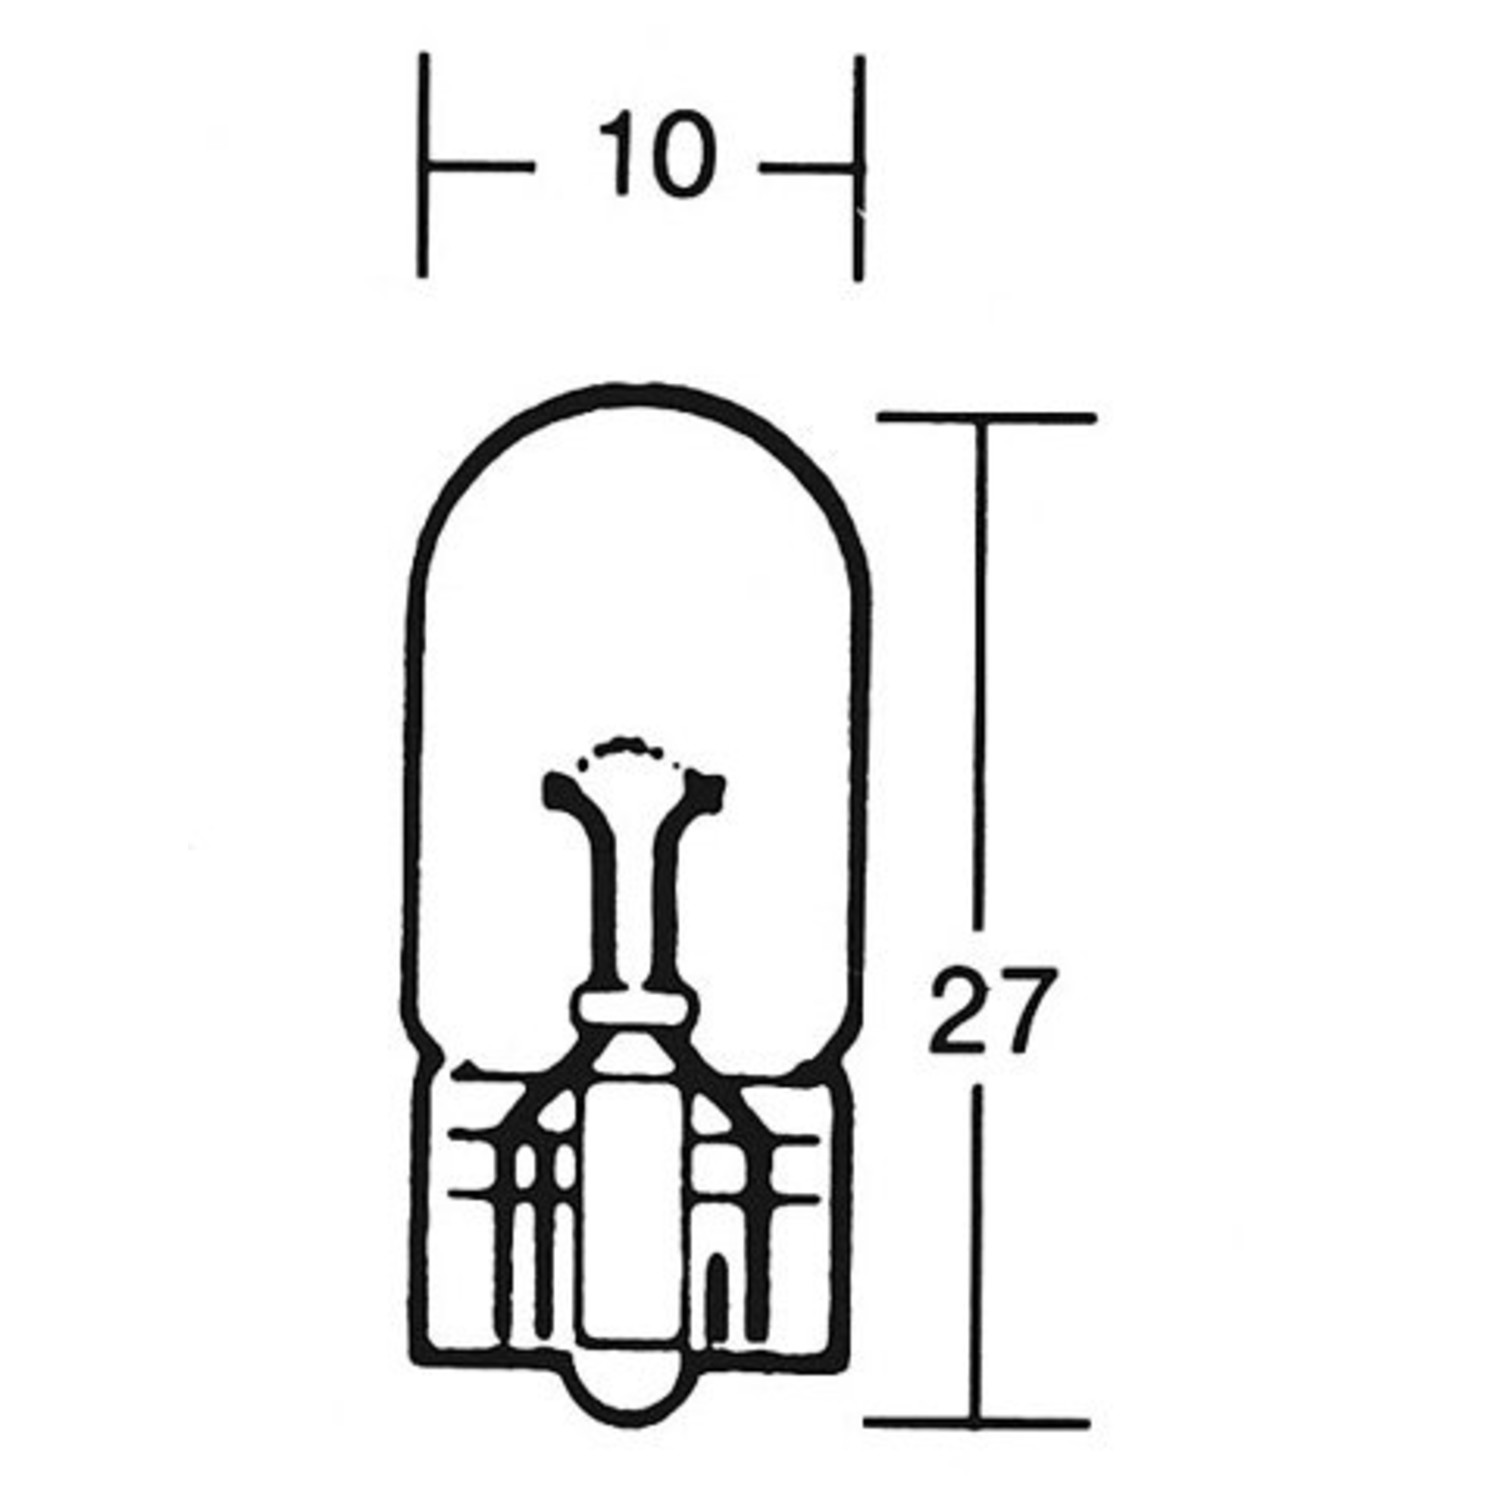 Lampe 12V / 5W (Glassockel)